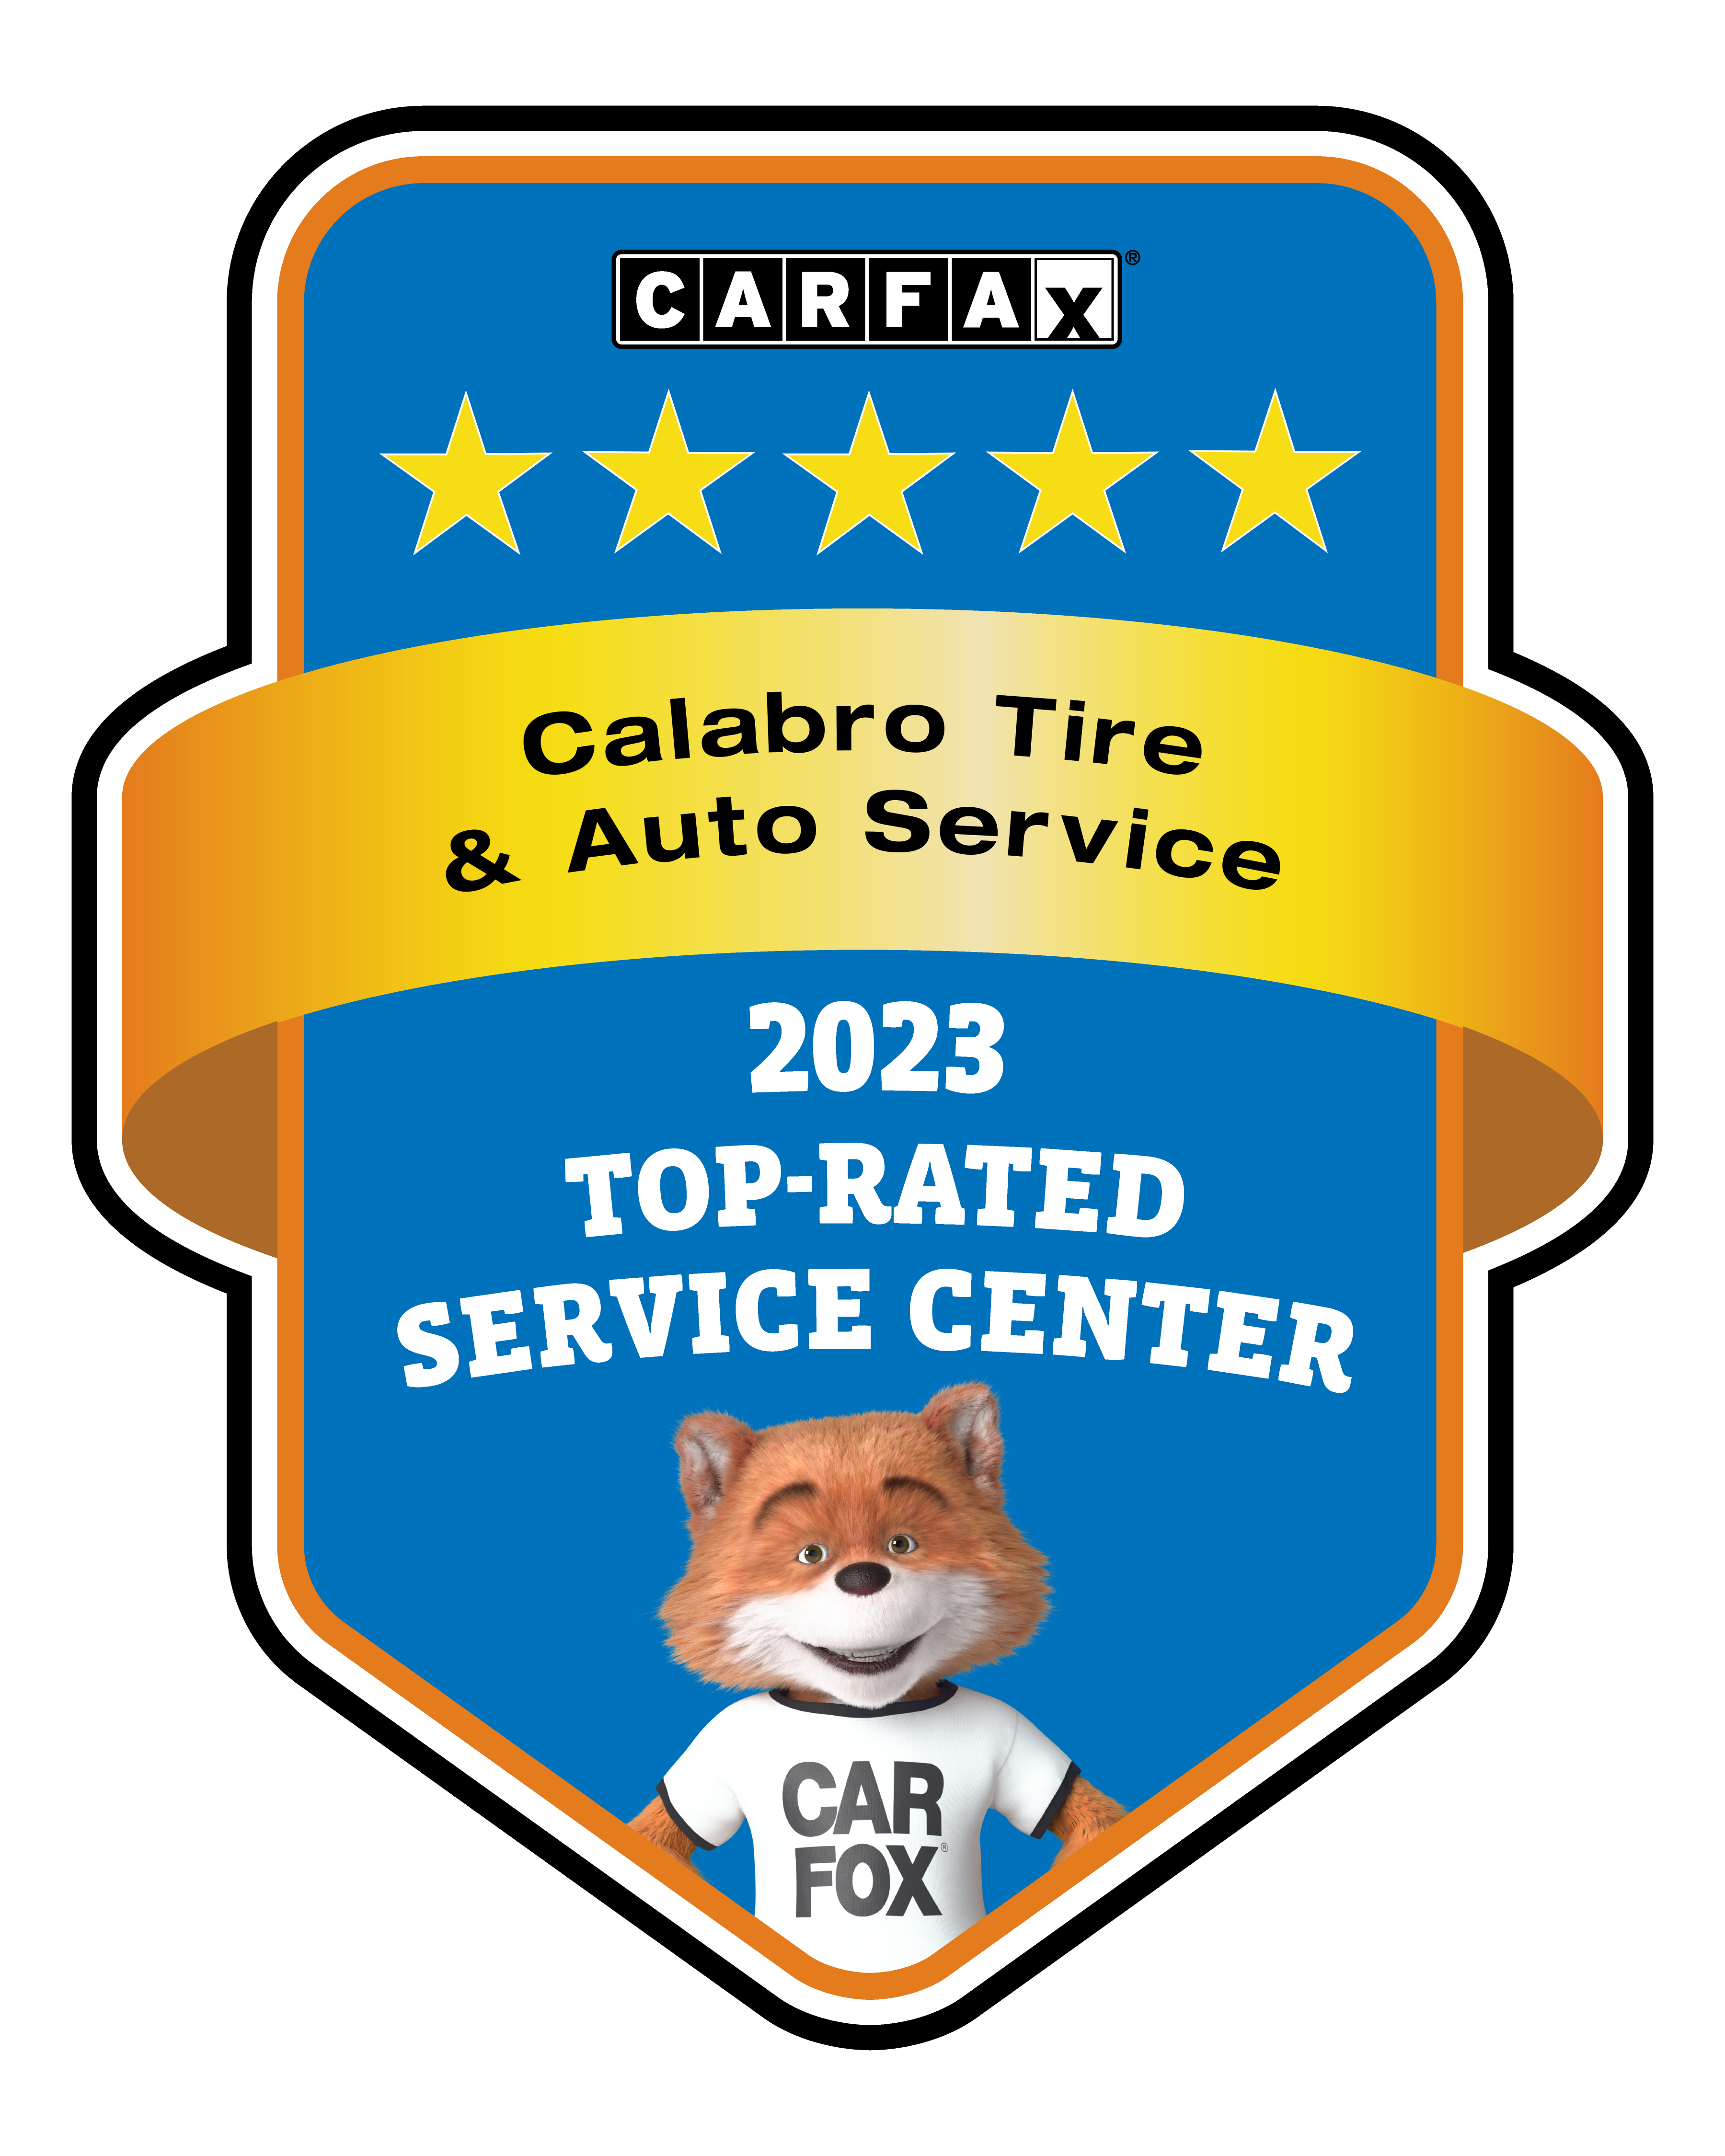 2020 Carfax Ratings